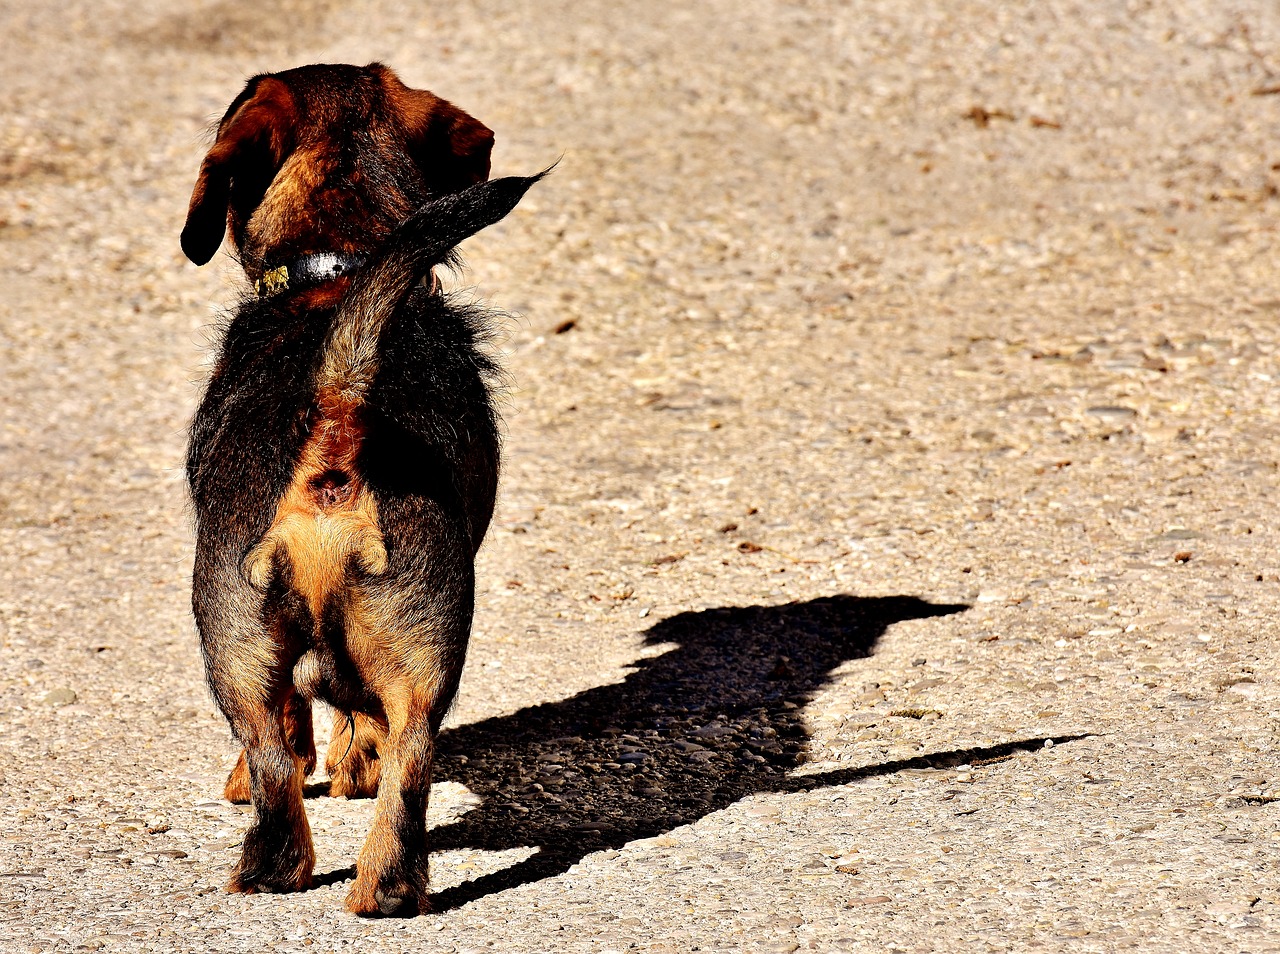 rauhaardackel dog animal free photo